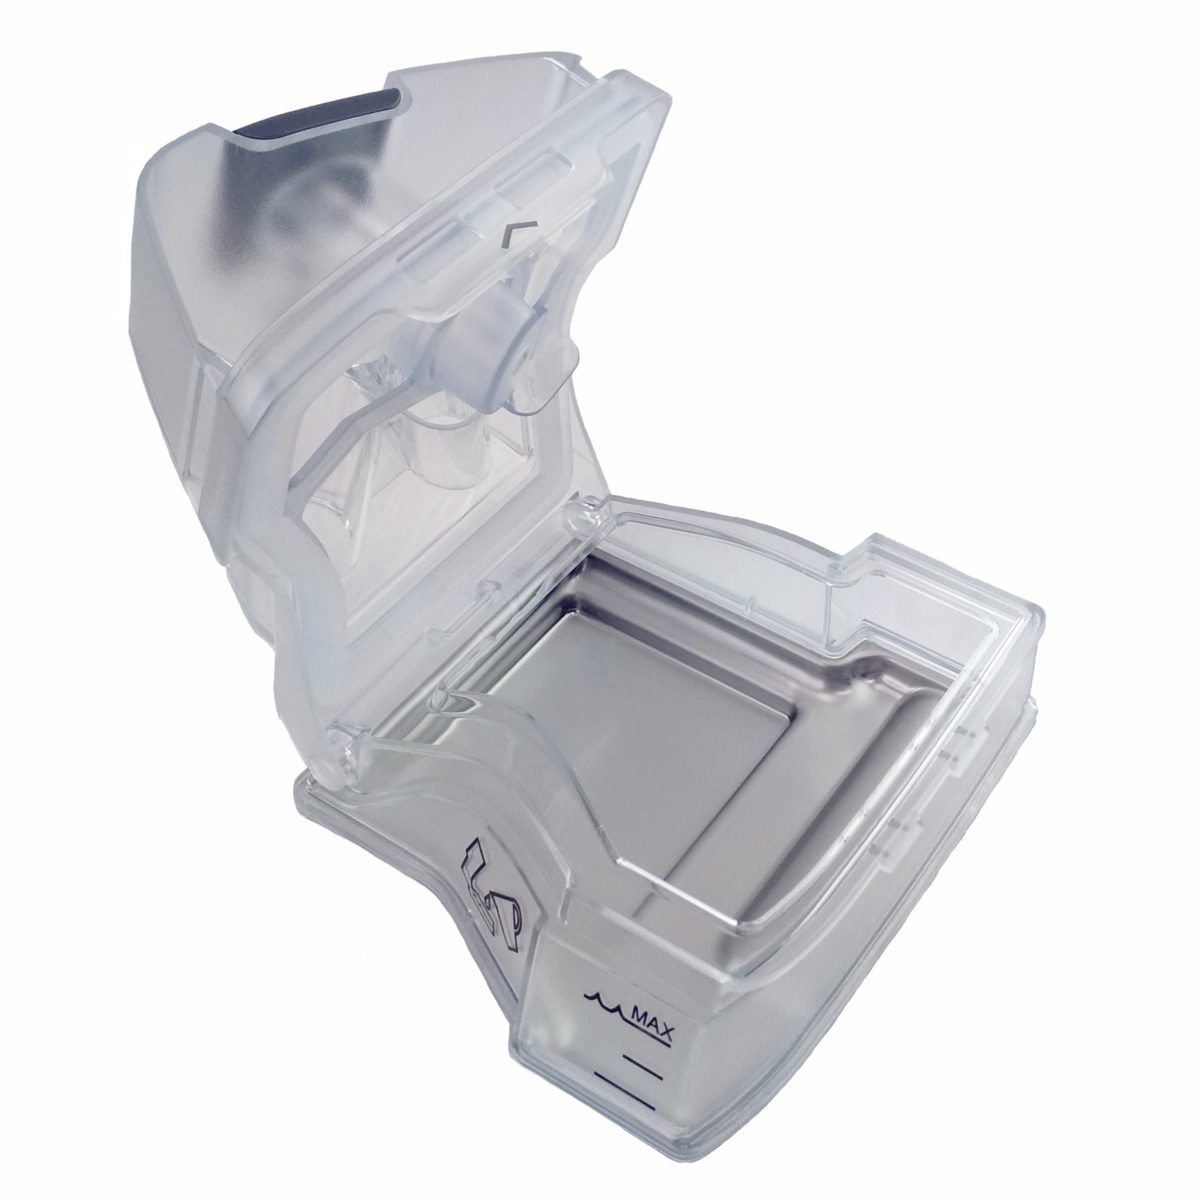 AirSense 10 CPAP humidifier